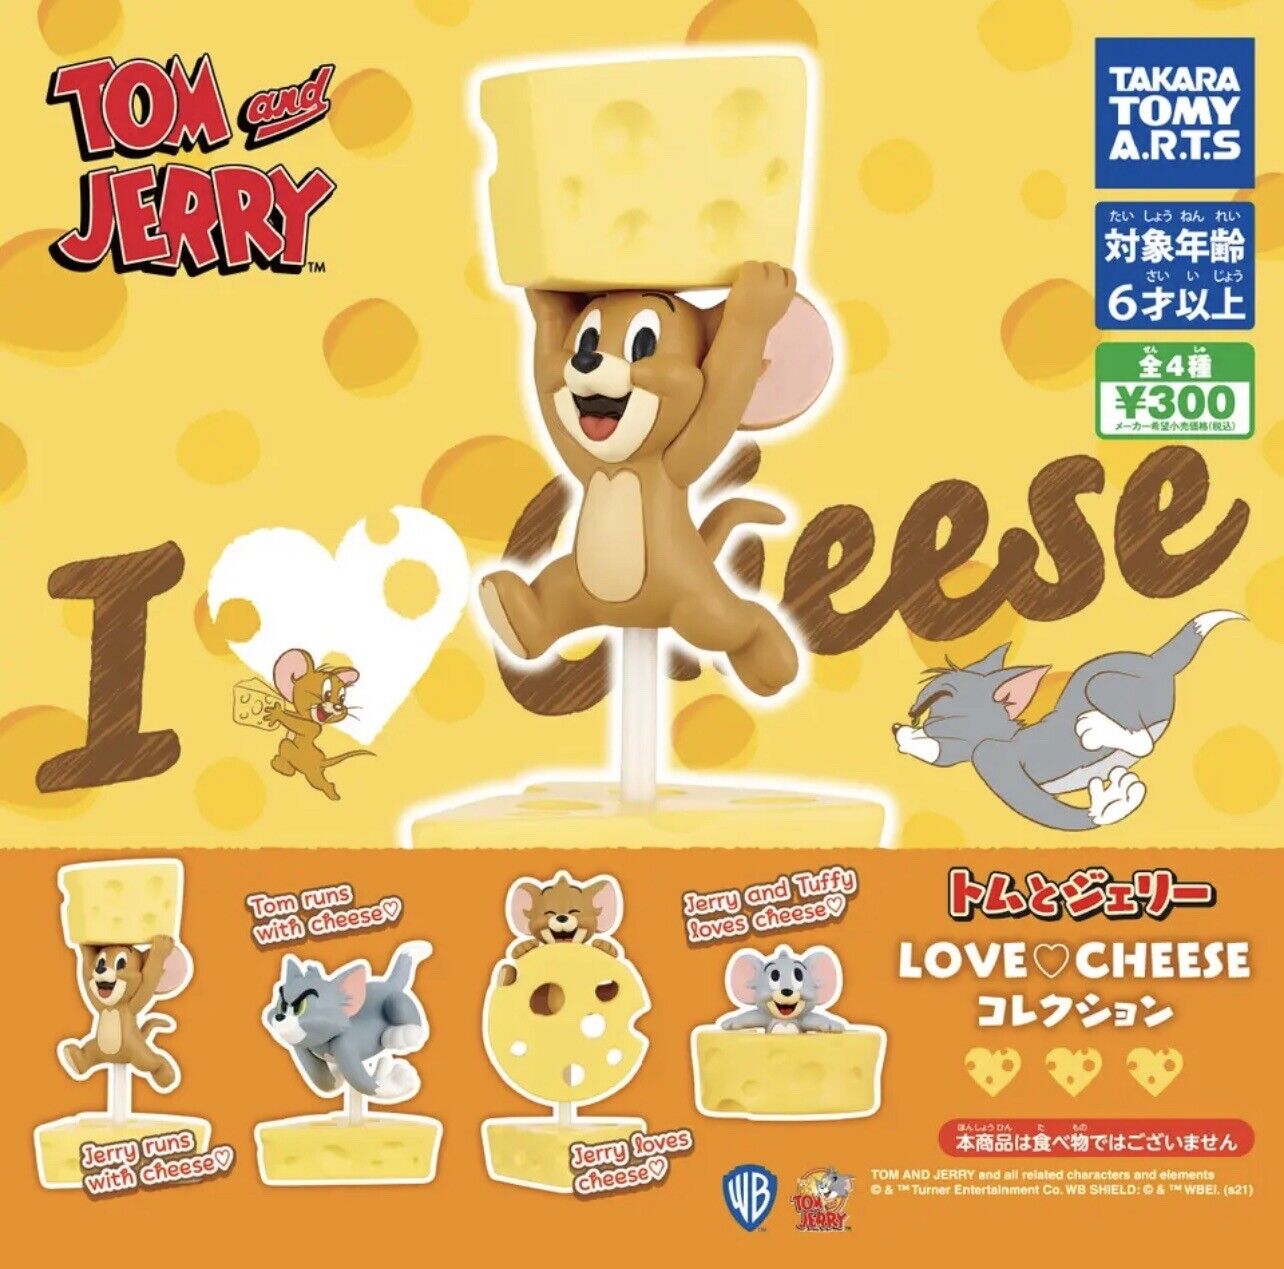 Takara Tomy T-ARTS Tom and Jerry I Love Cheese Scene FULL Set of 4 Gashapon